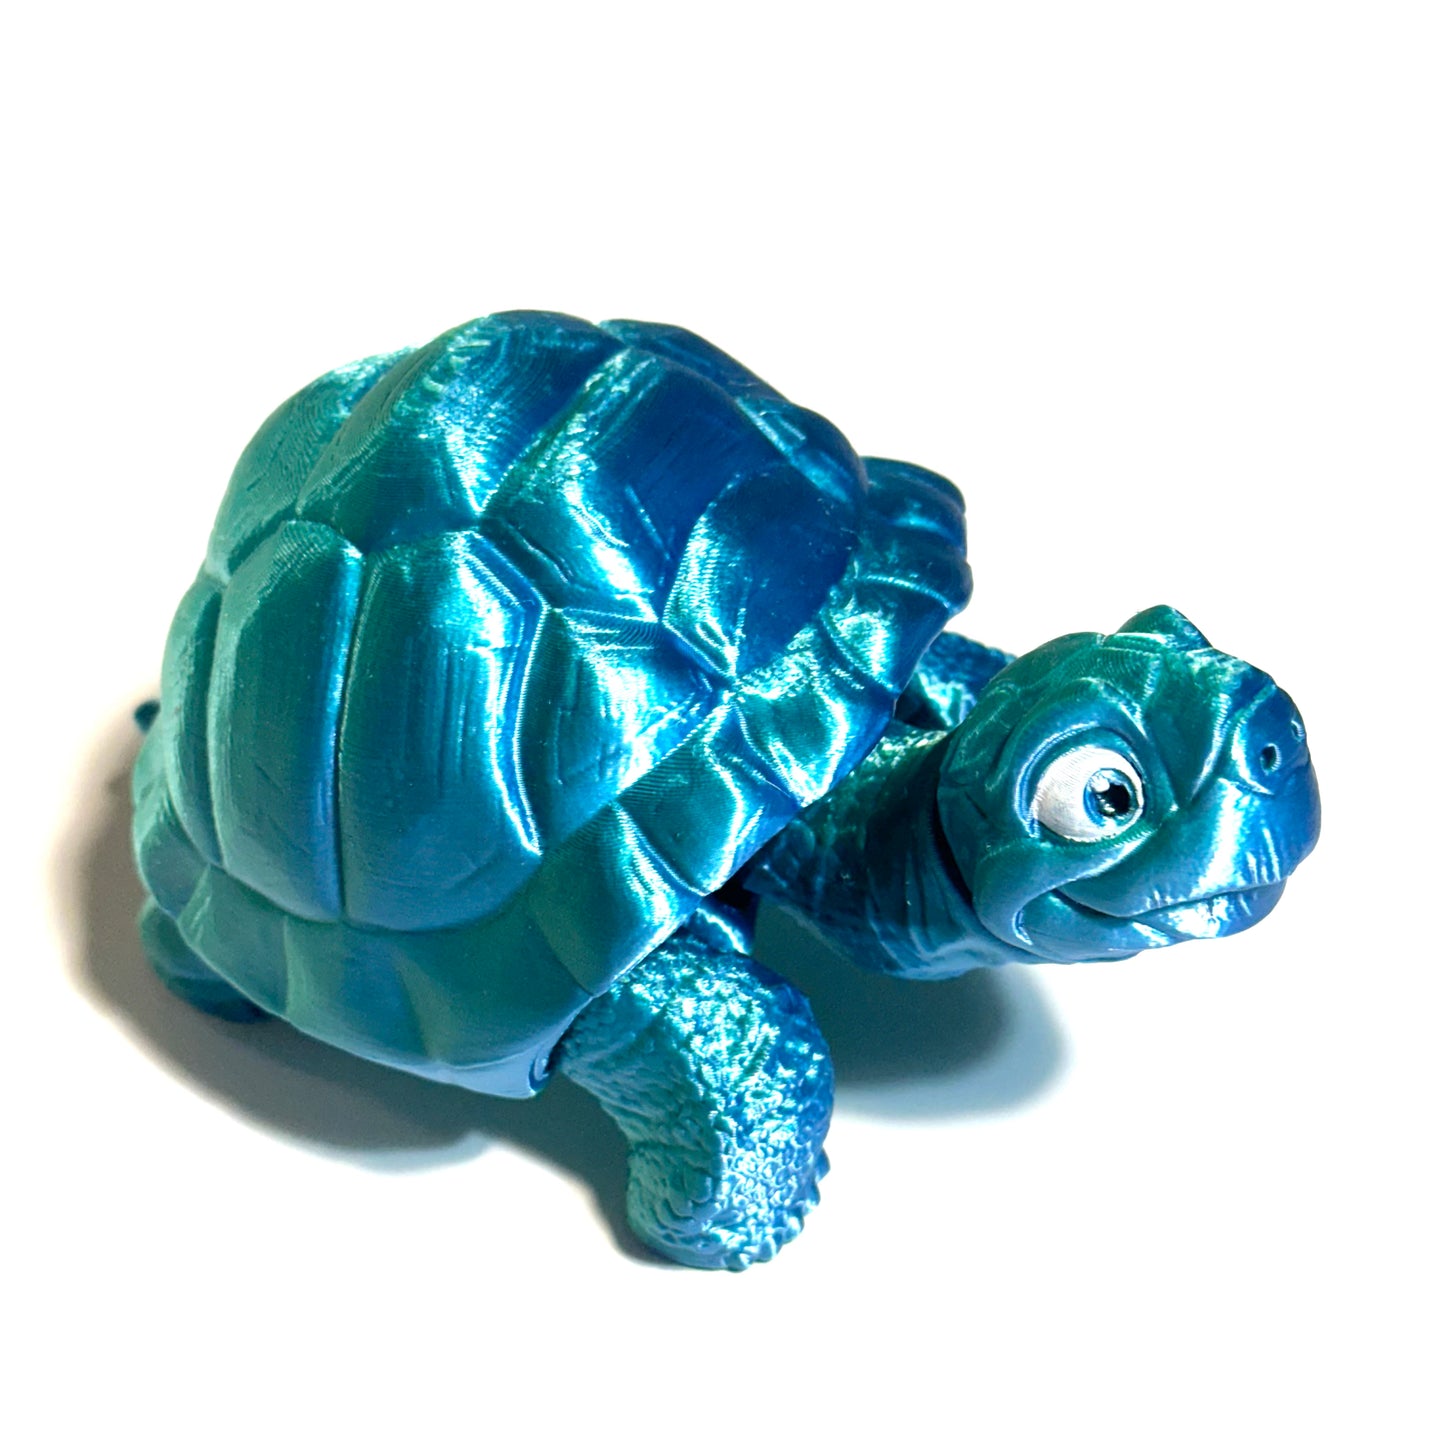 Tortoise - 3D Printed Articulating Figure